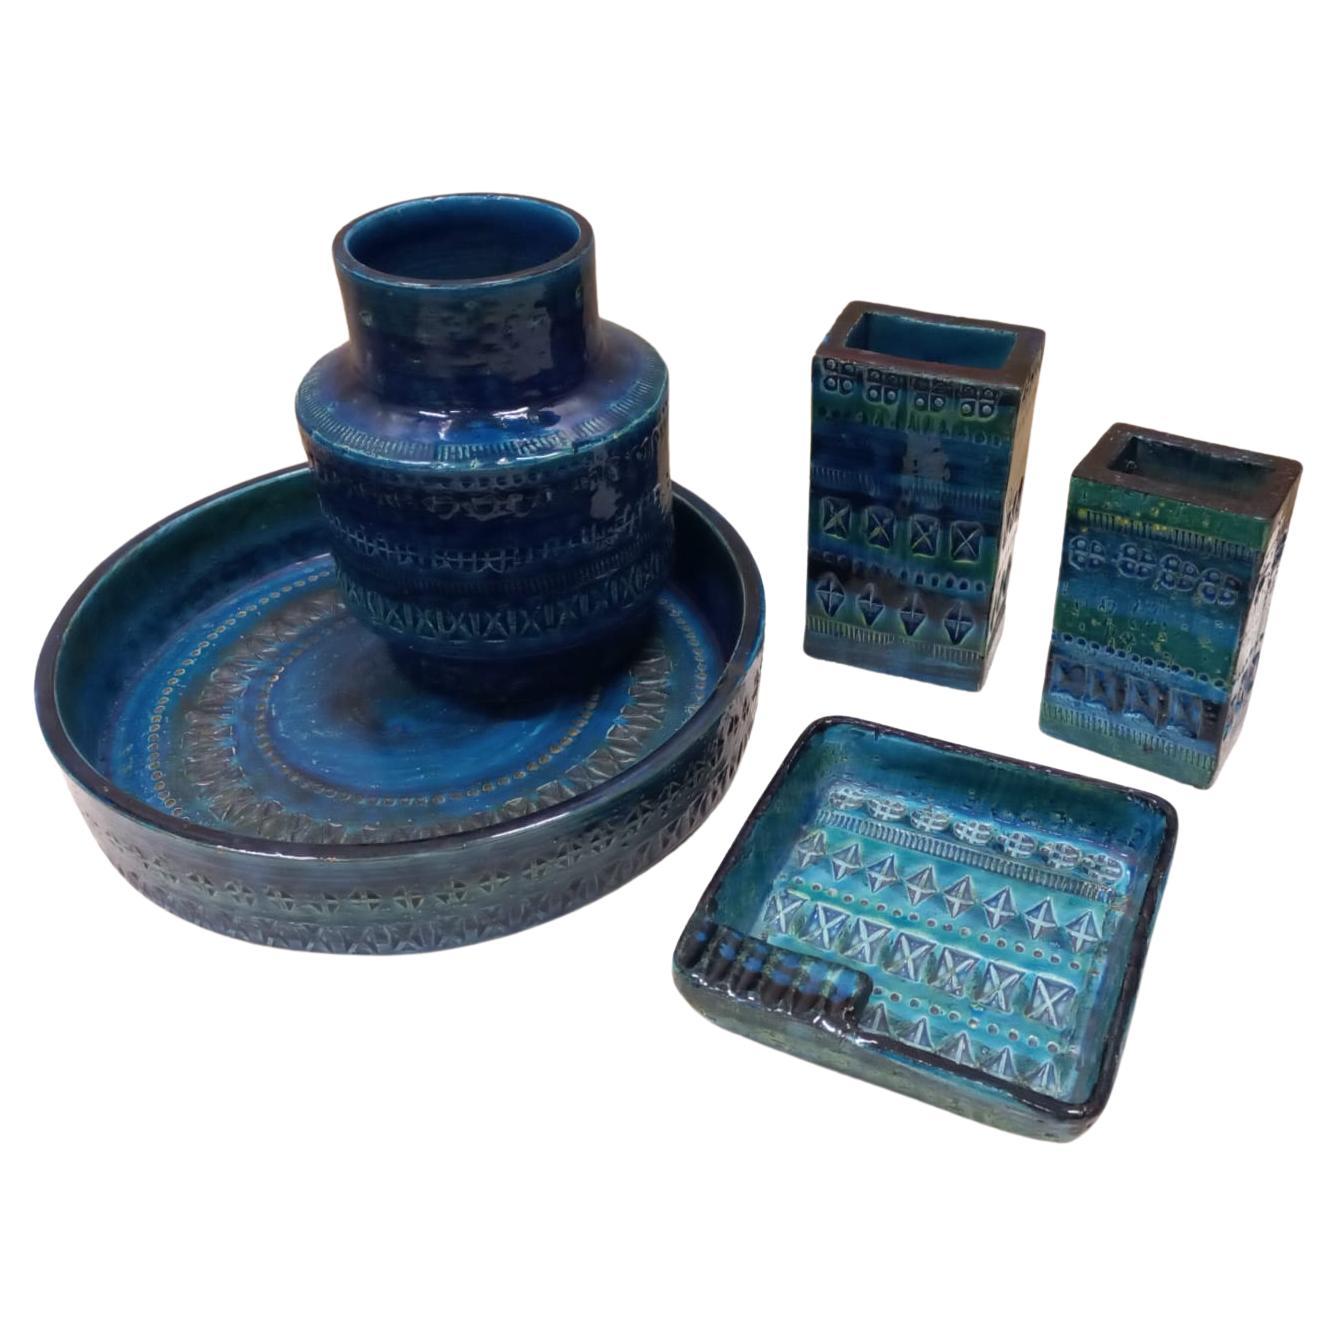 Aldo Londi Circular Ceramic Set, Blue Glazed, Bitossi, Mid 20th Century